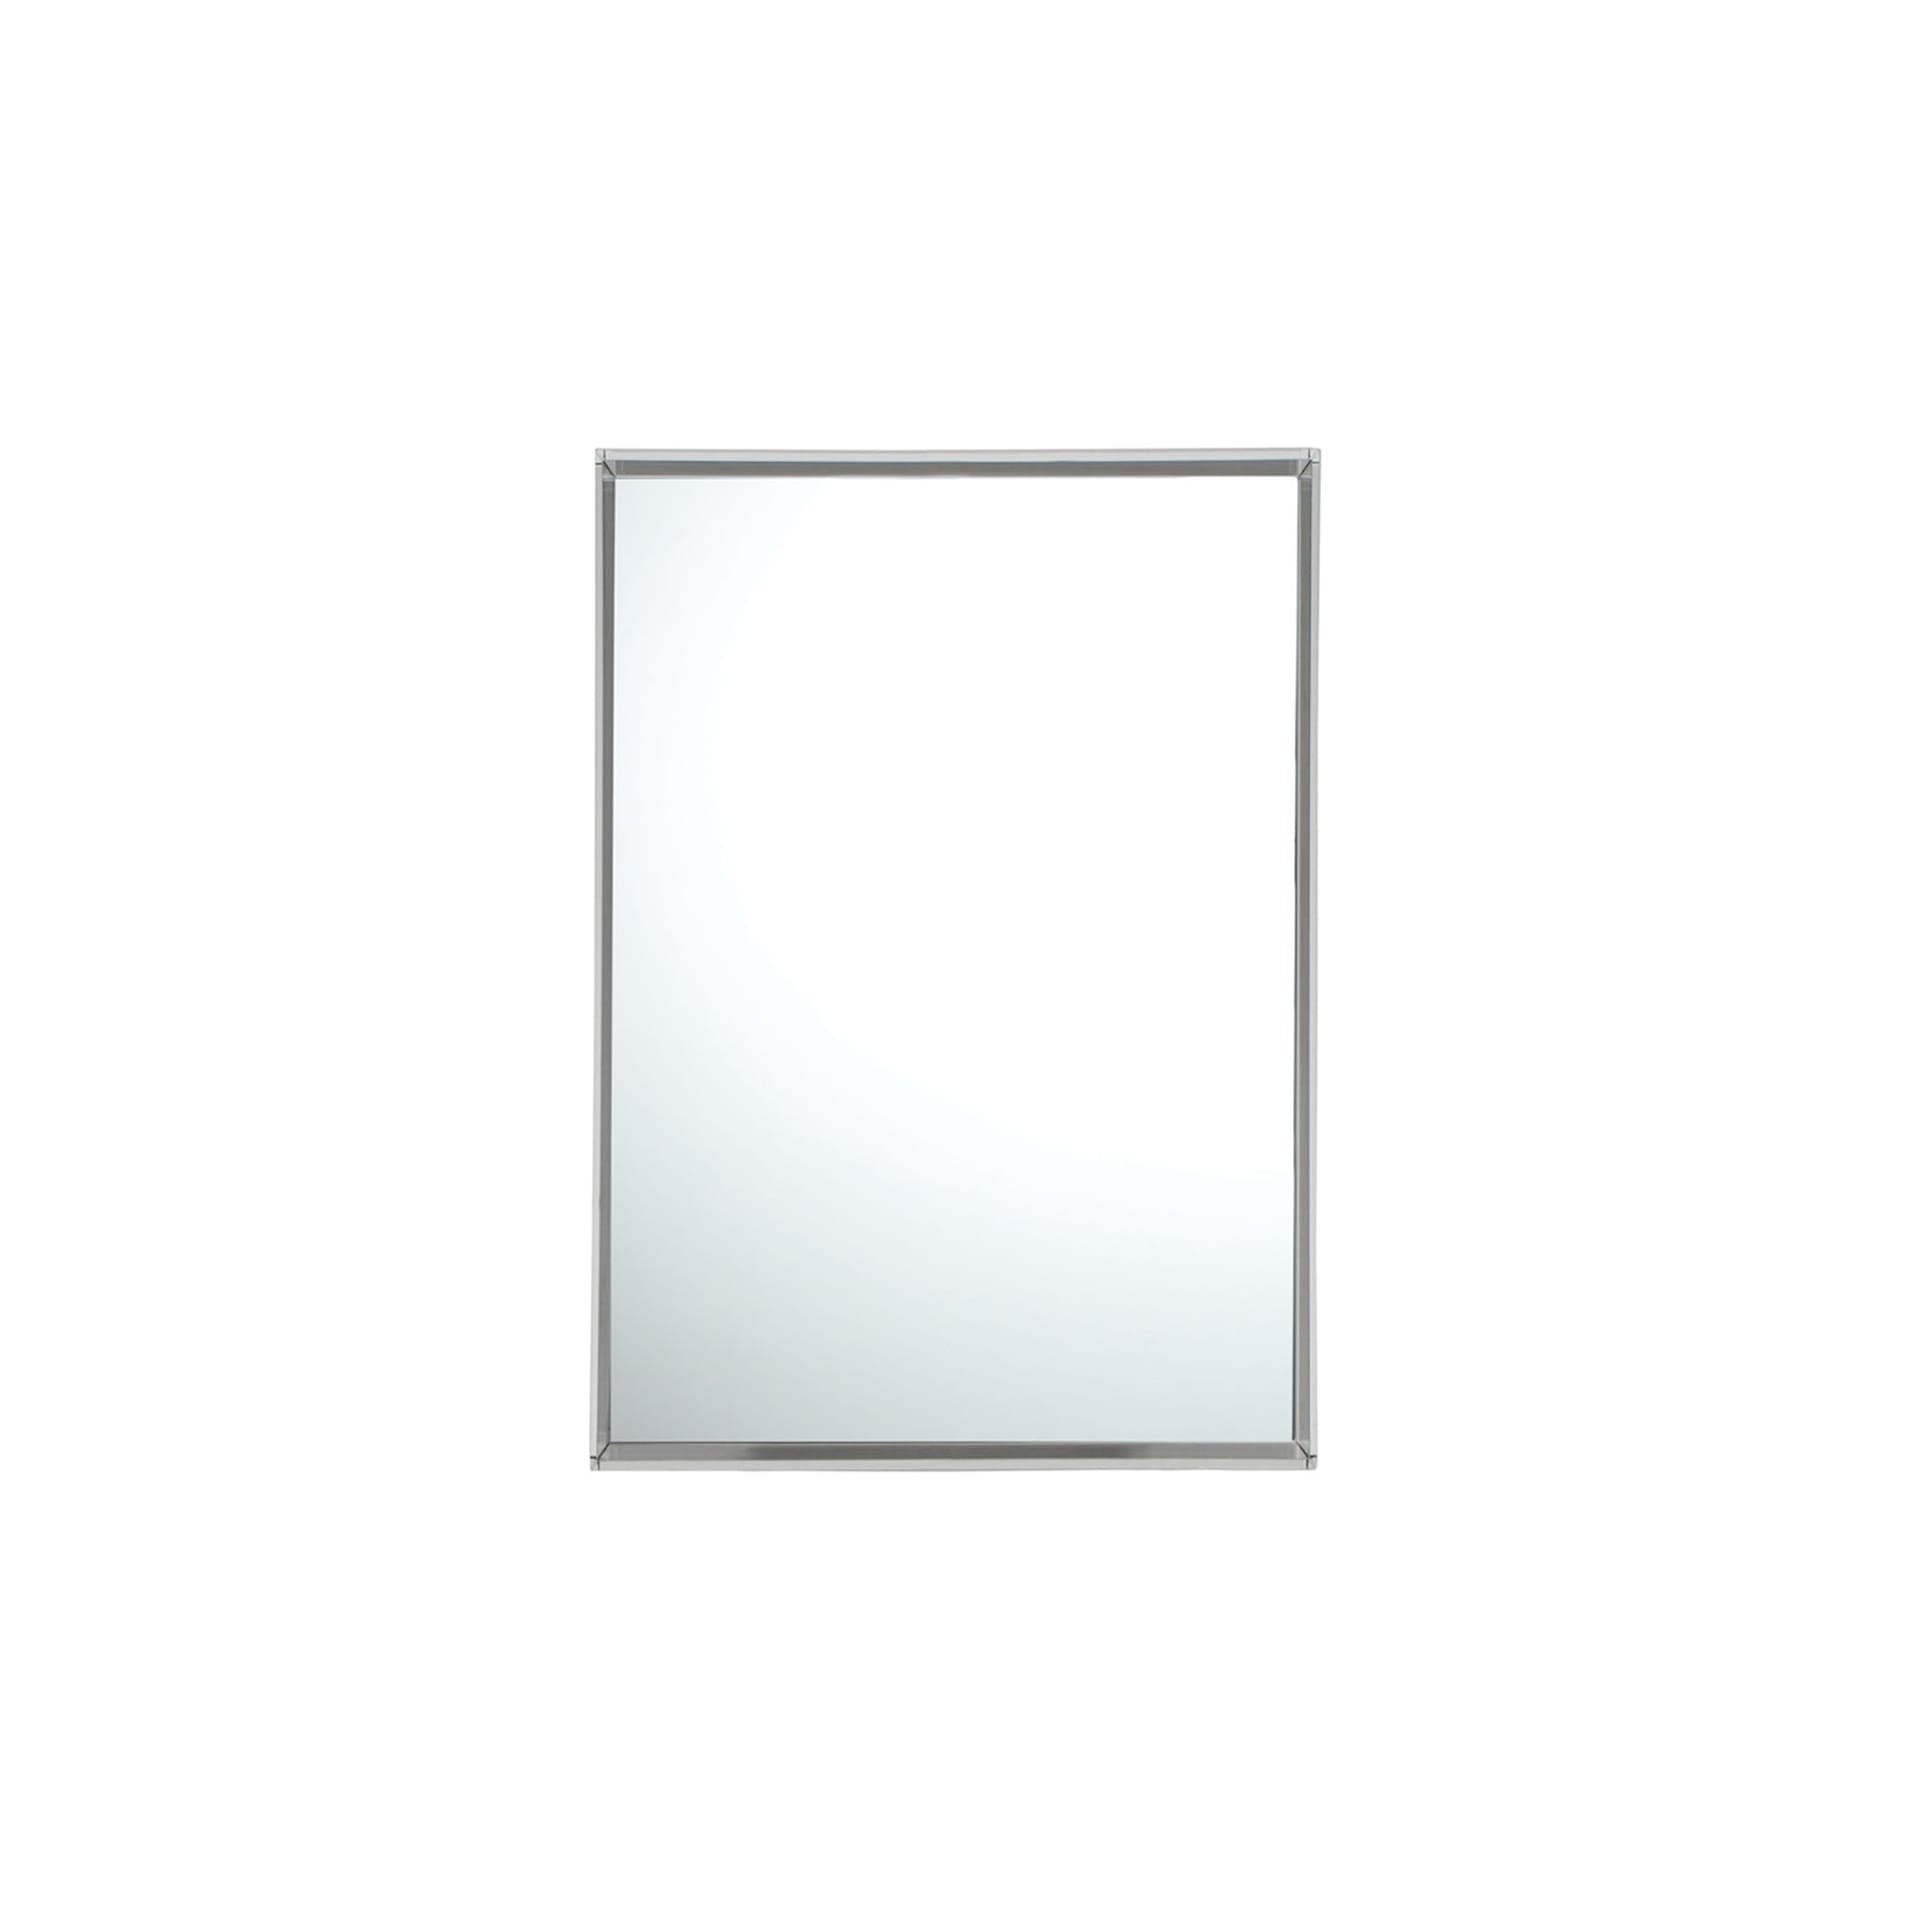 Only Me Mirror - Kartell - Philippe Starck - NO GA